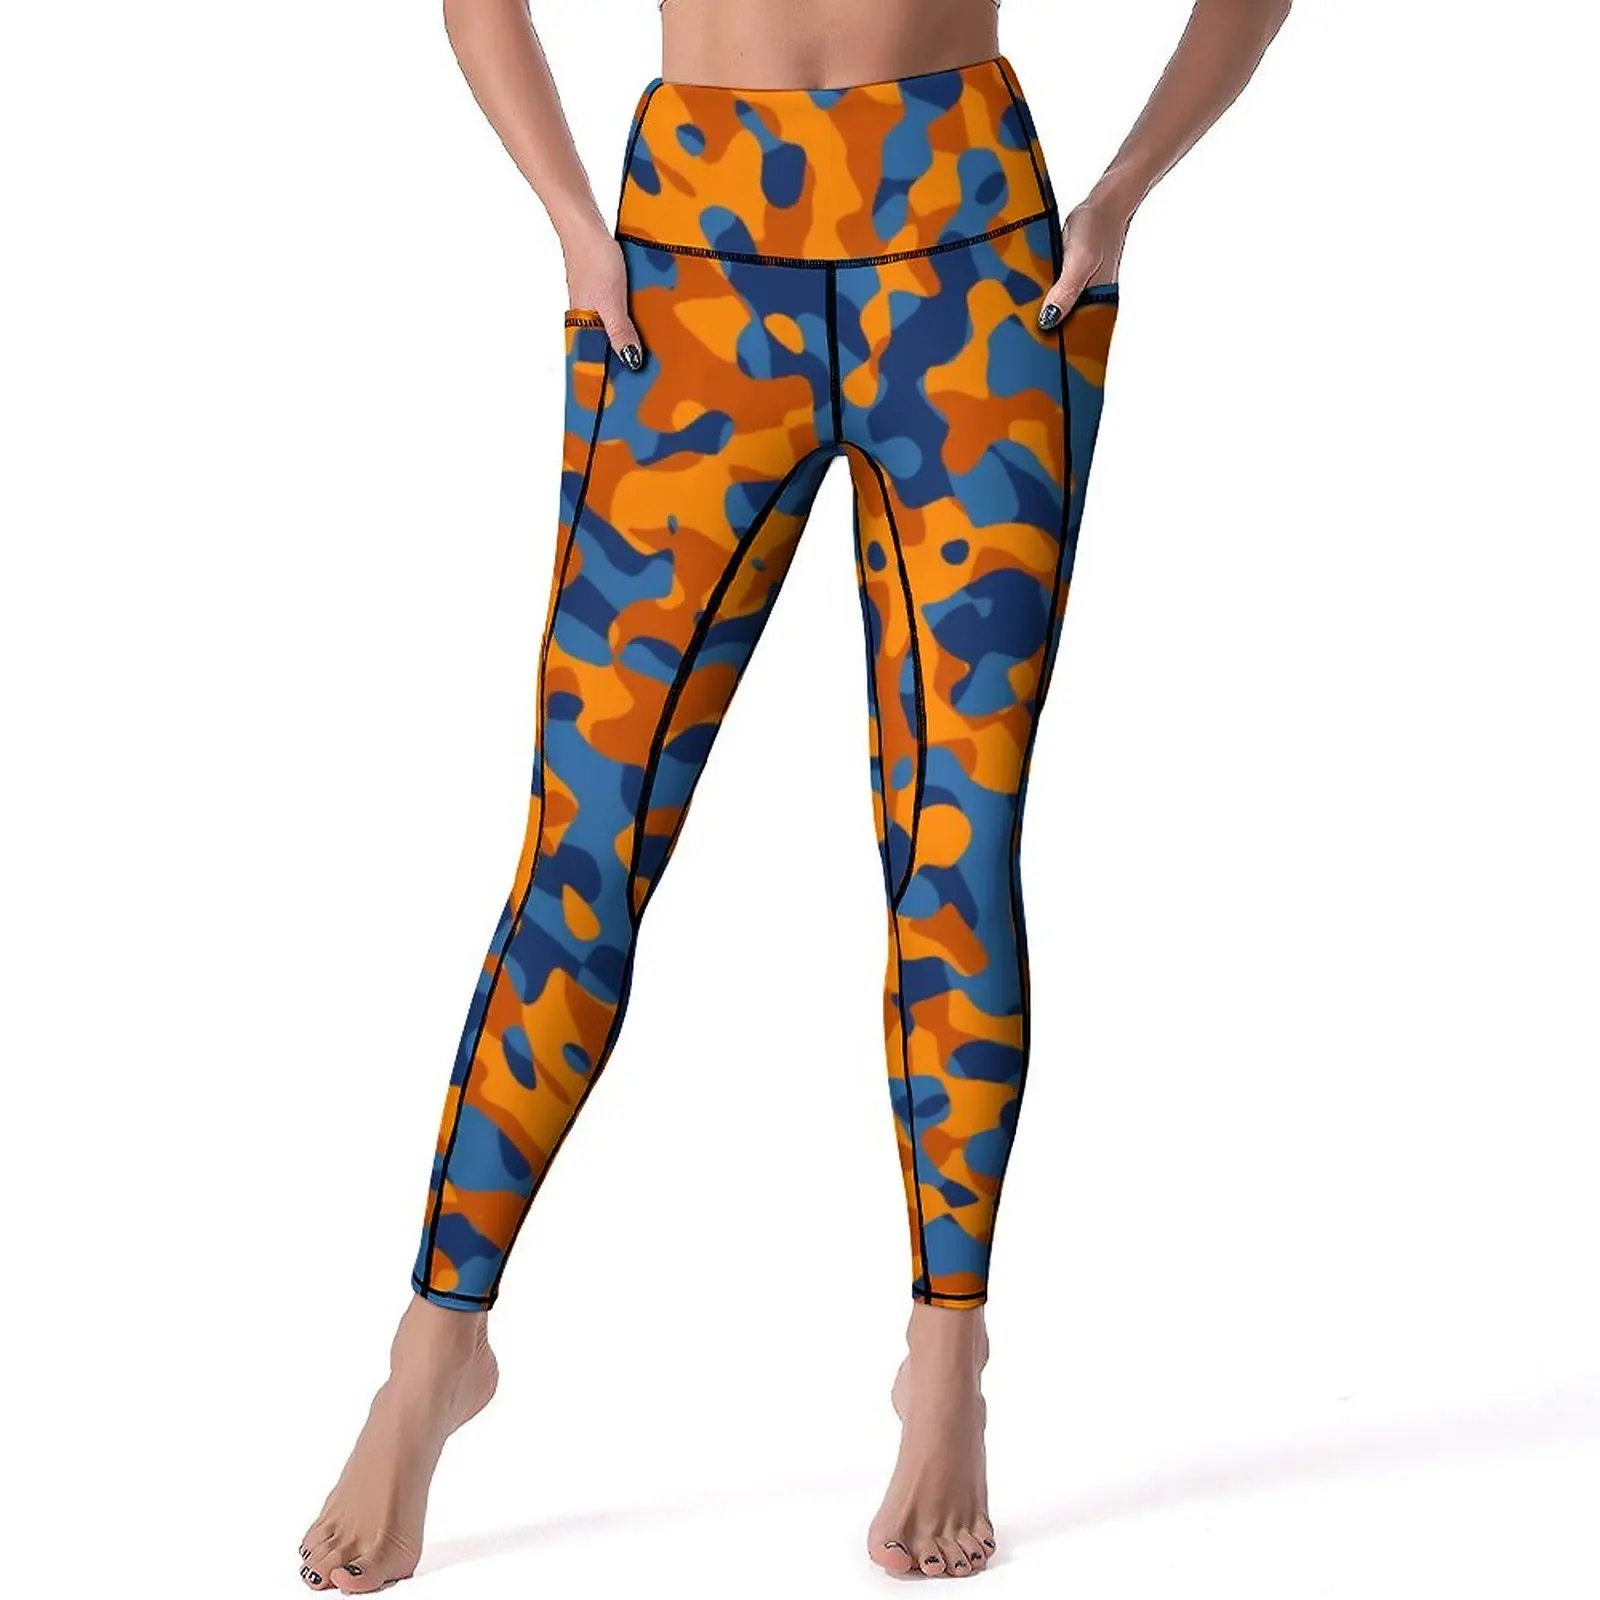 

Blue And Orange Camo Leggings Sexy Camouflage Push Up Yoga Pants Aesthetic Stretch Leggins Women Graphic Gym Sport Legging